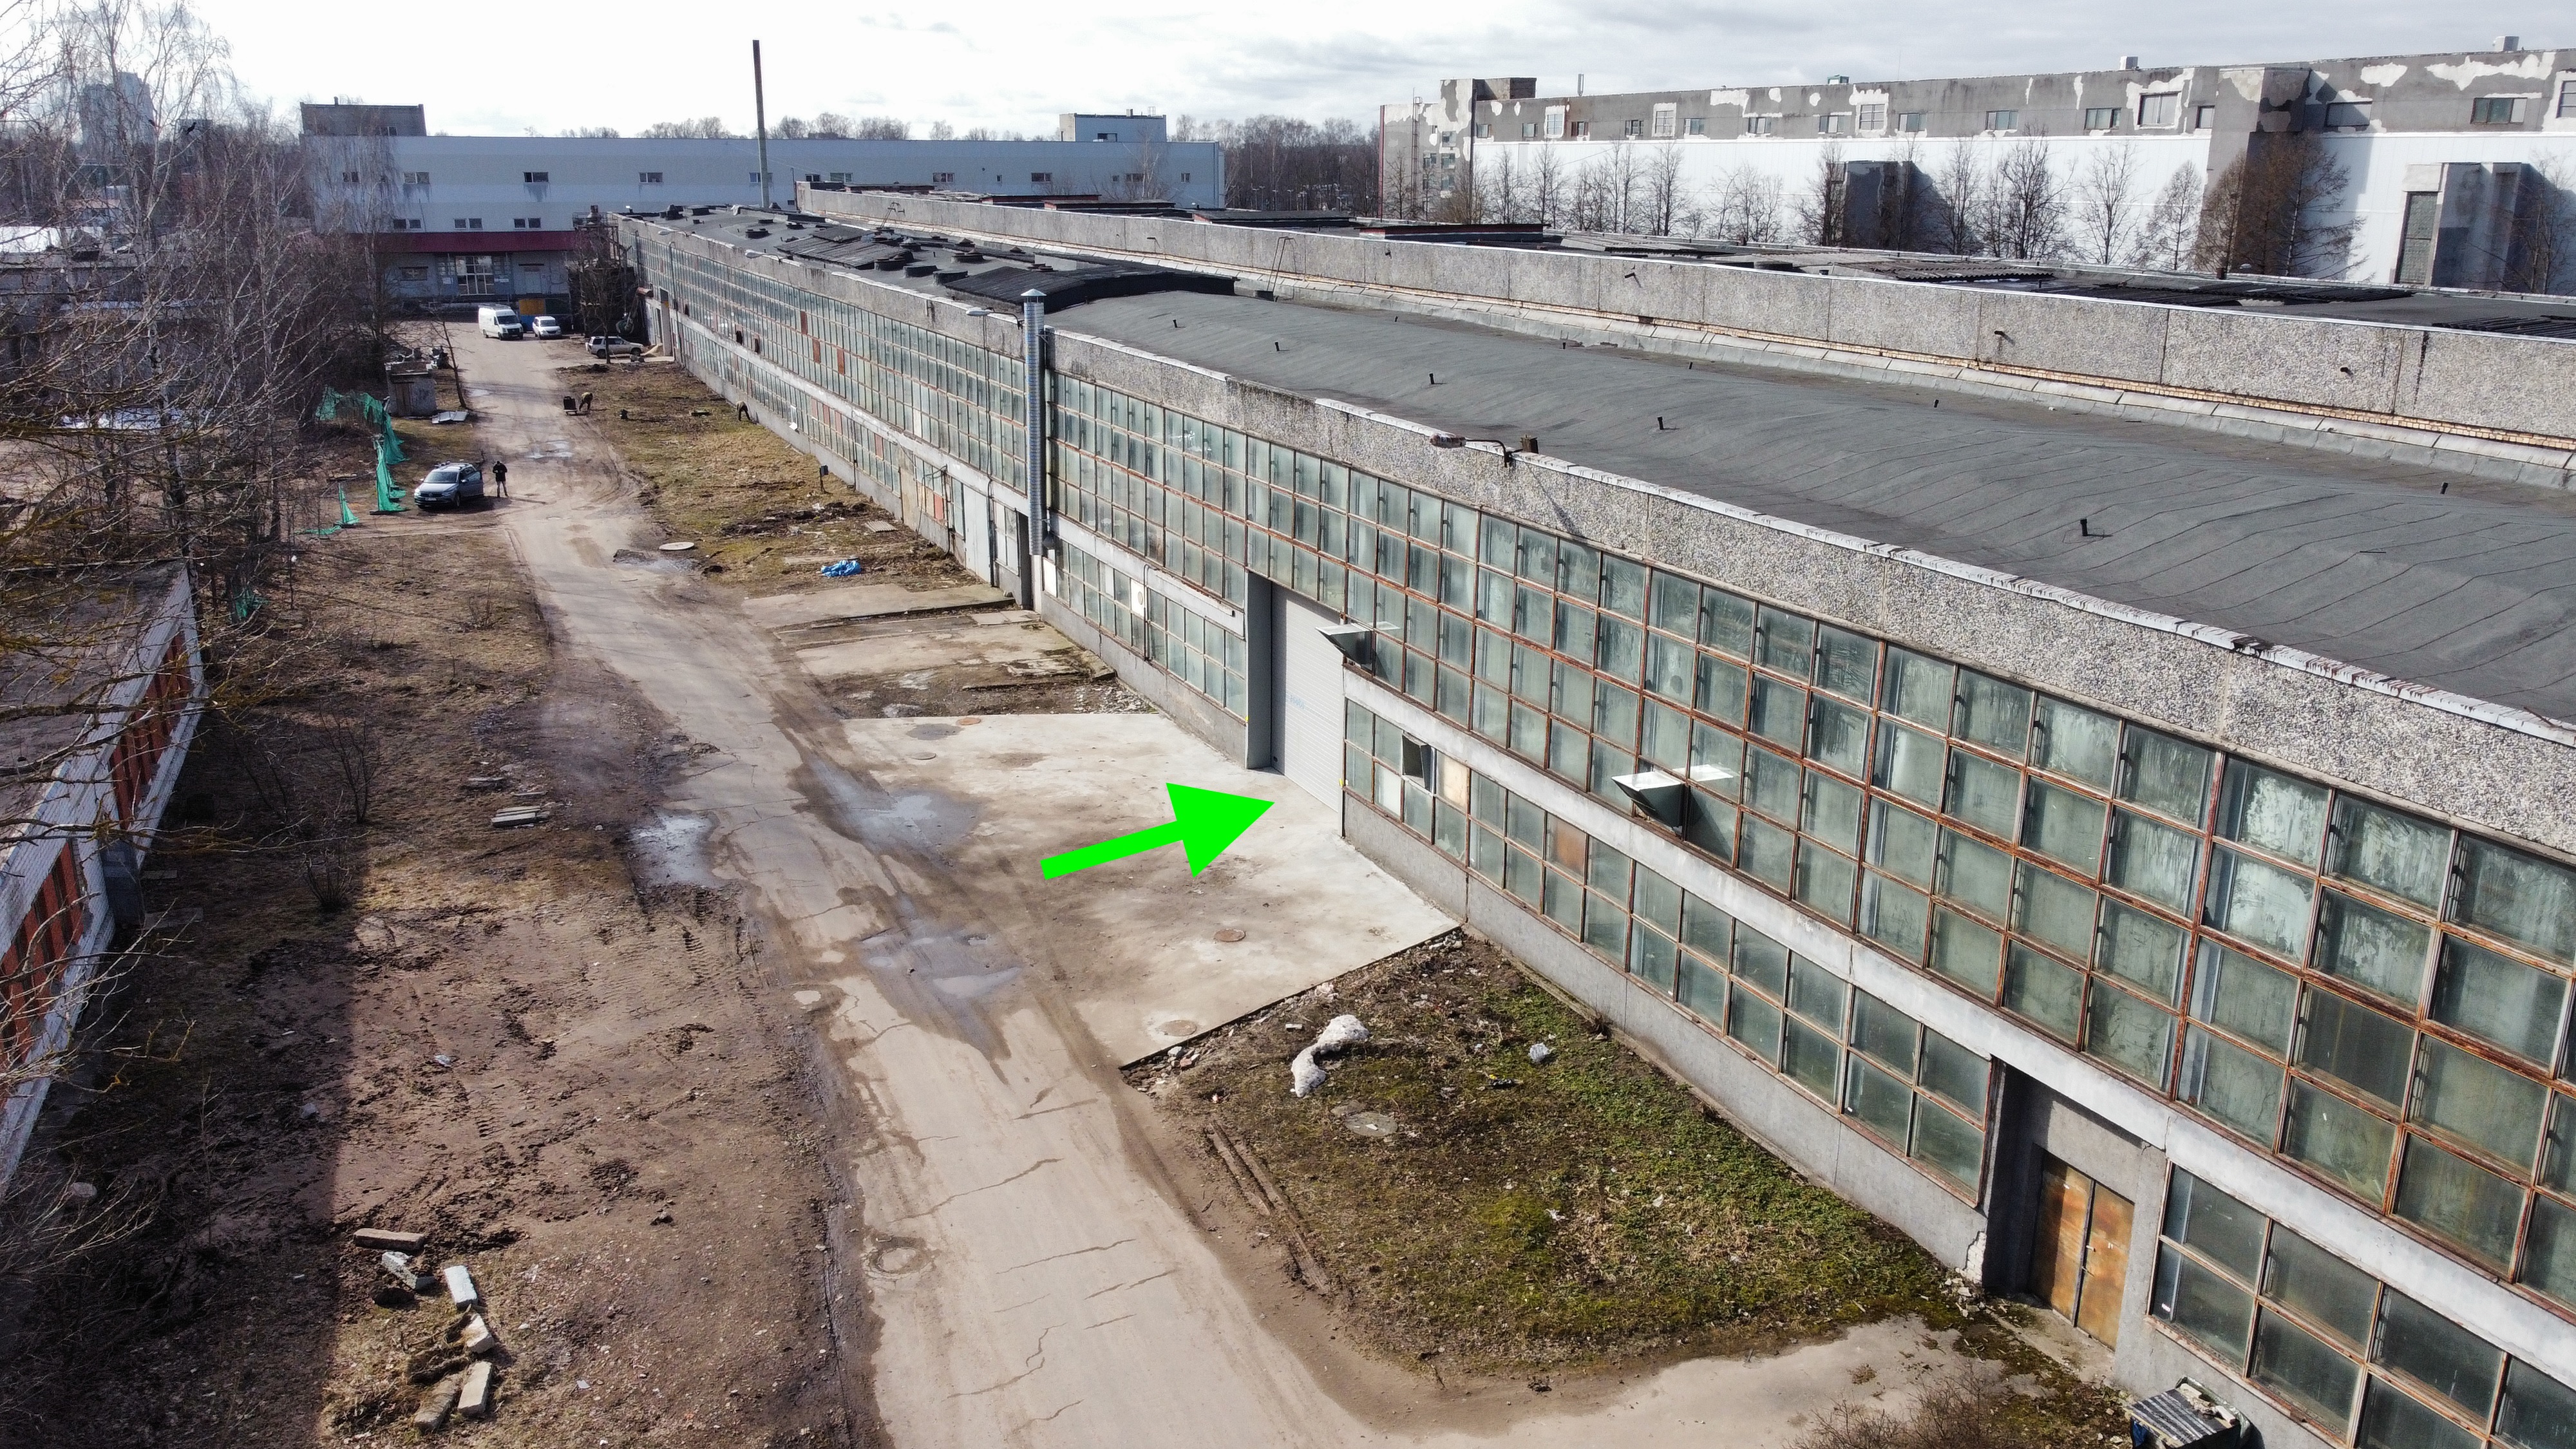 Industrial premises for rent, Kurzemes prospekts street - Image 1